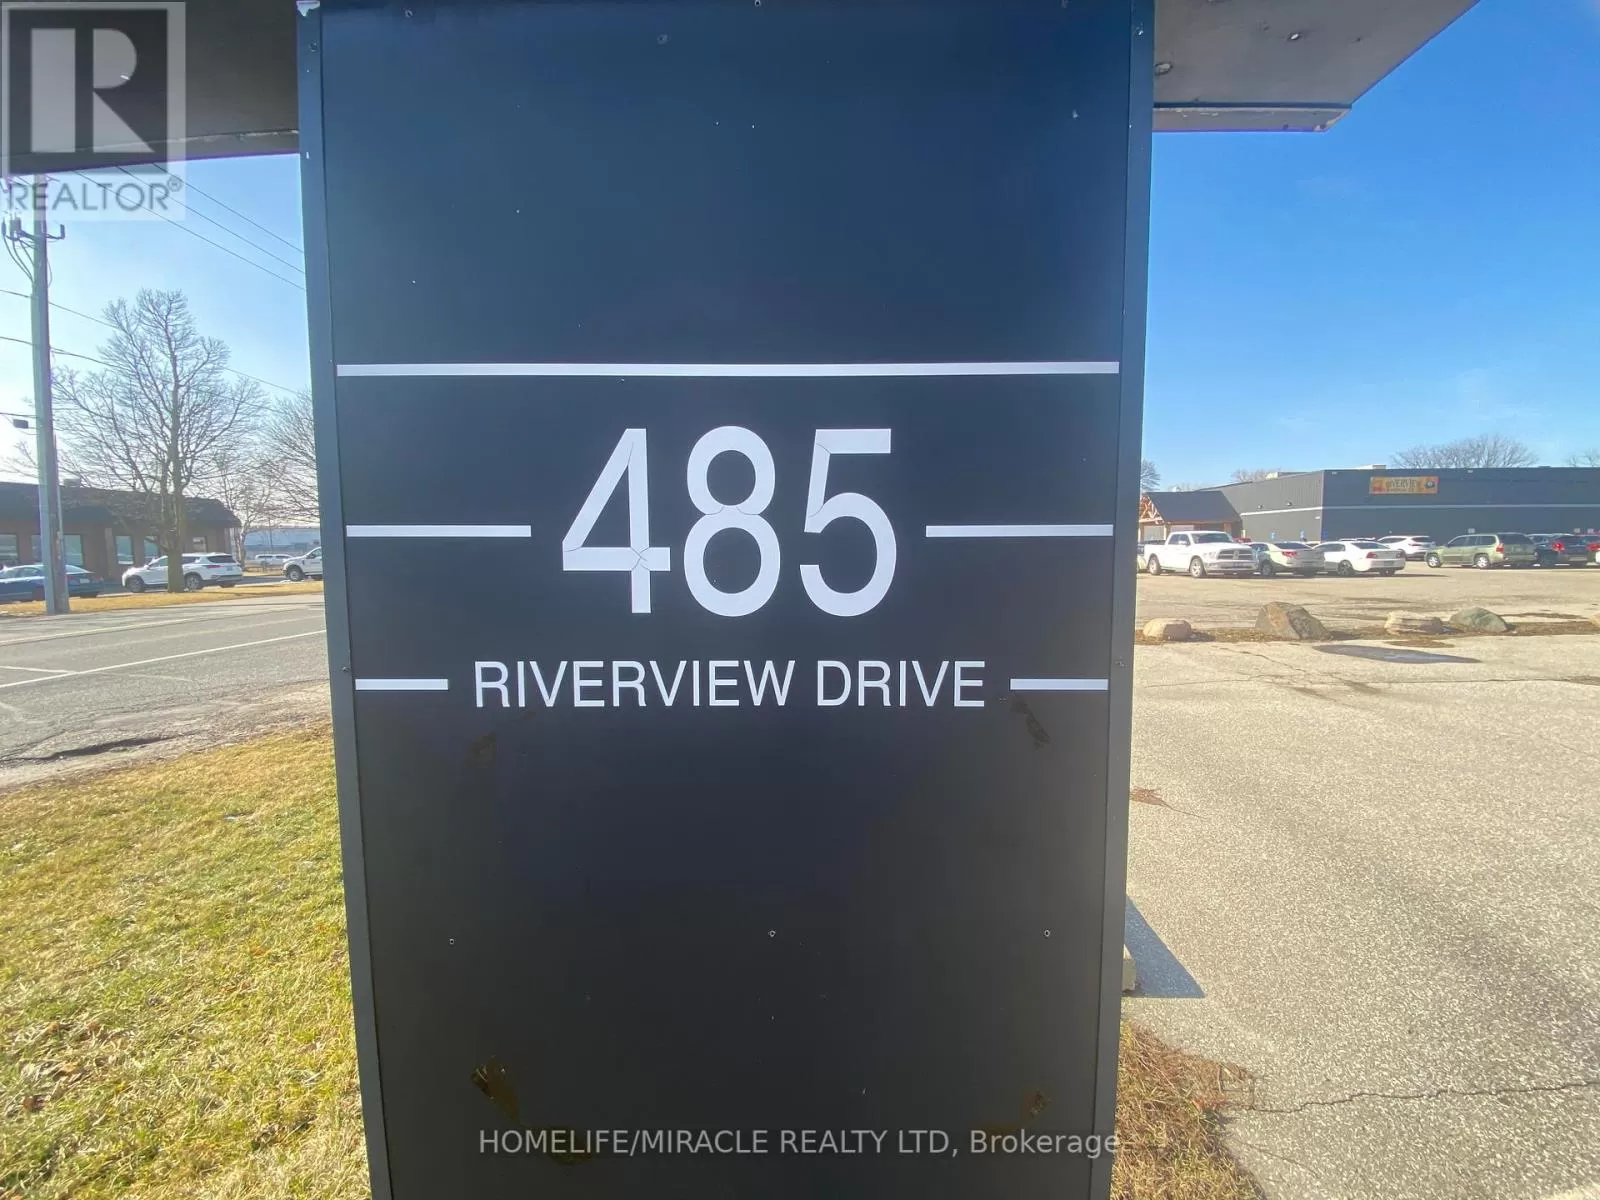 485 Riverview Dr, Chatham-Kent, Ontario N7M 5J5